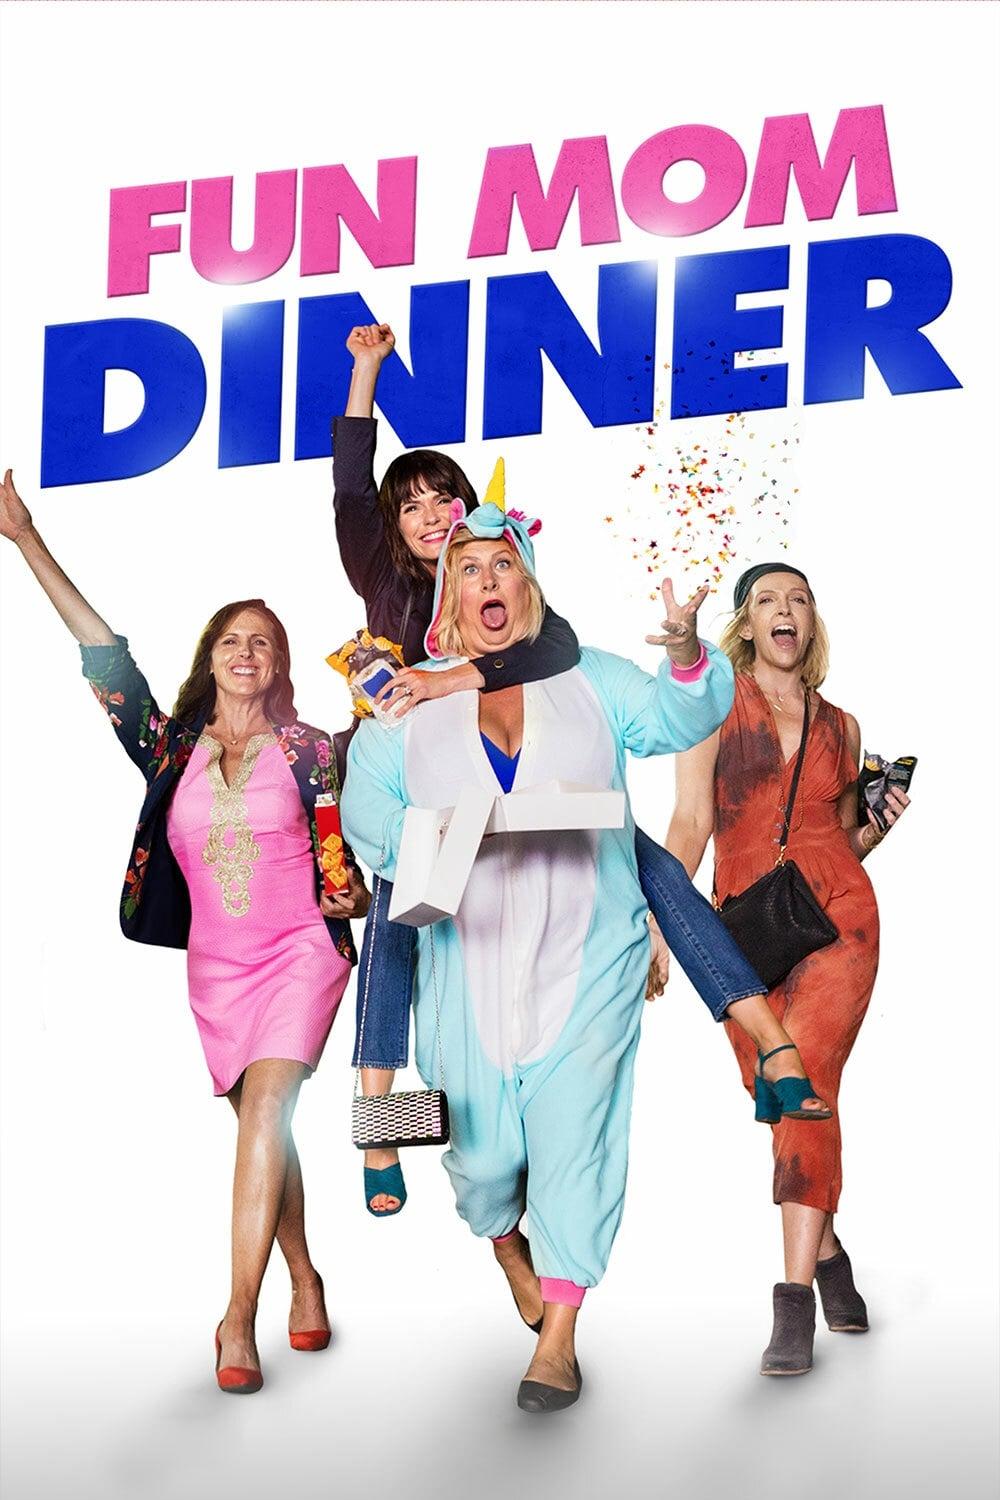 Fun Mom Dinner poster